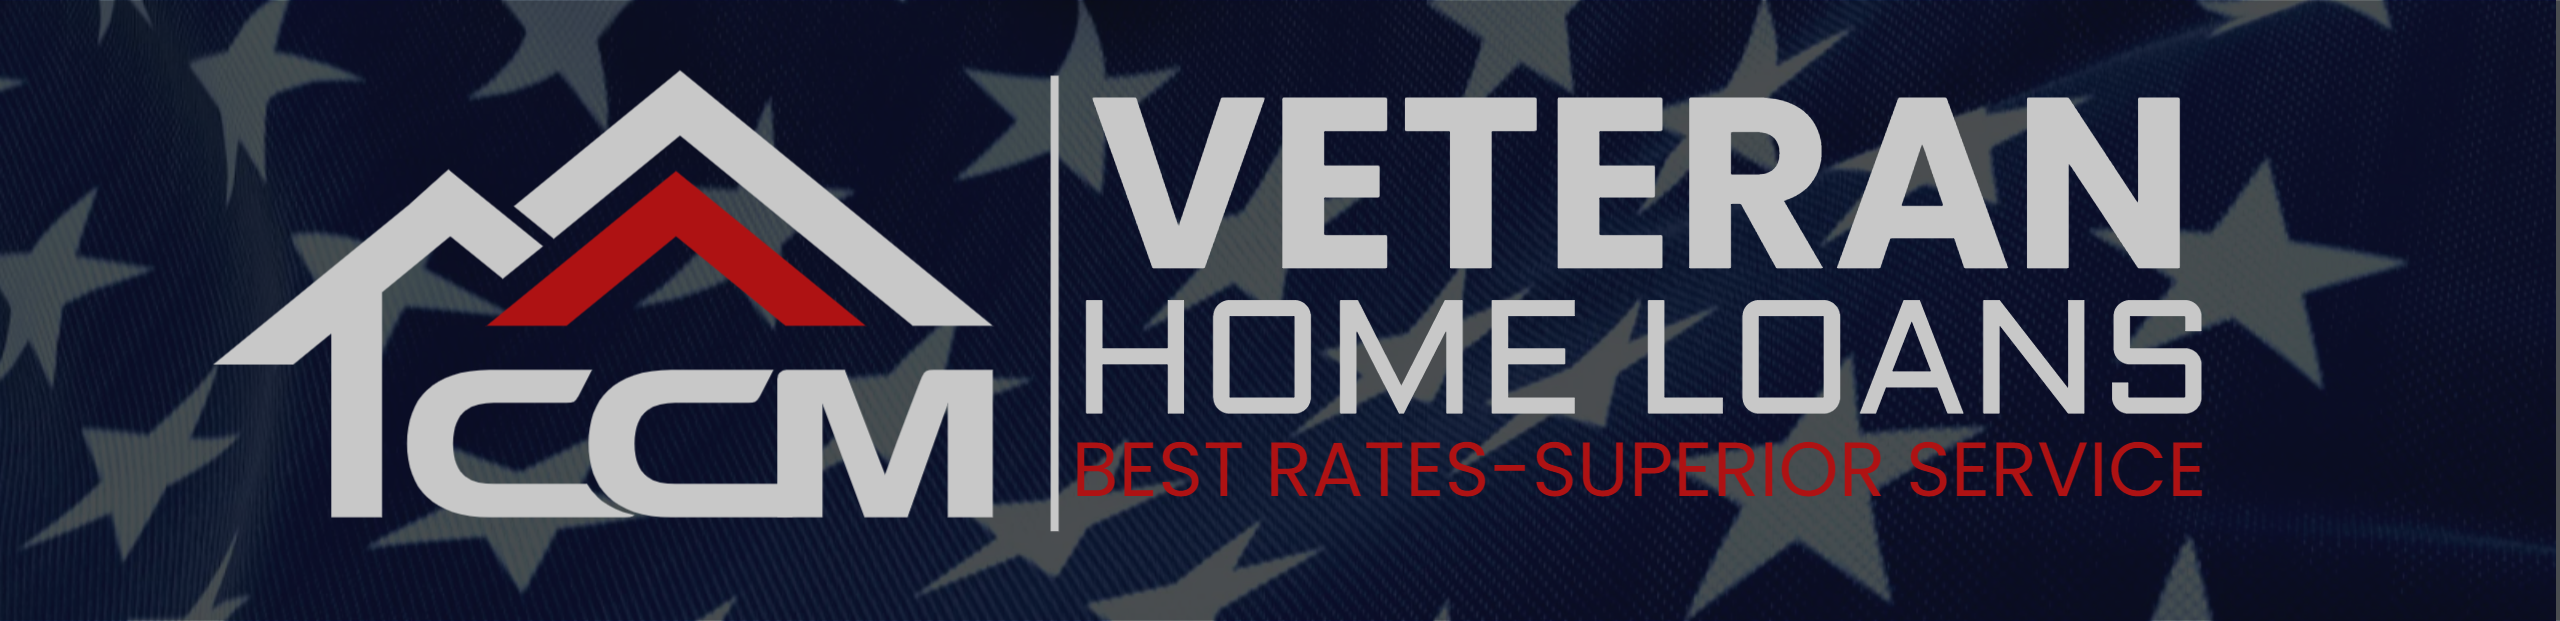 Nebraska VA Home Loan, VA Mortgage, Rates